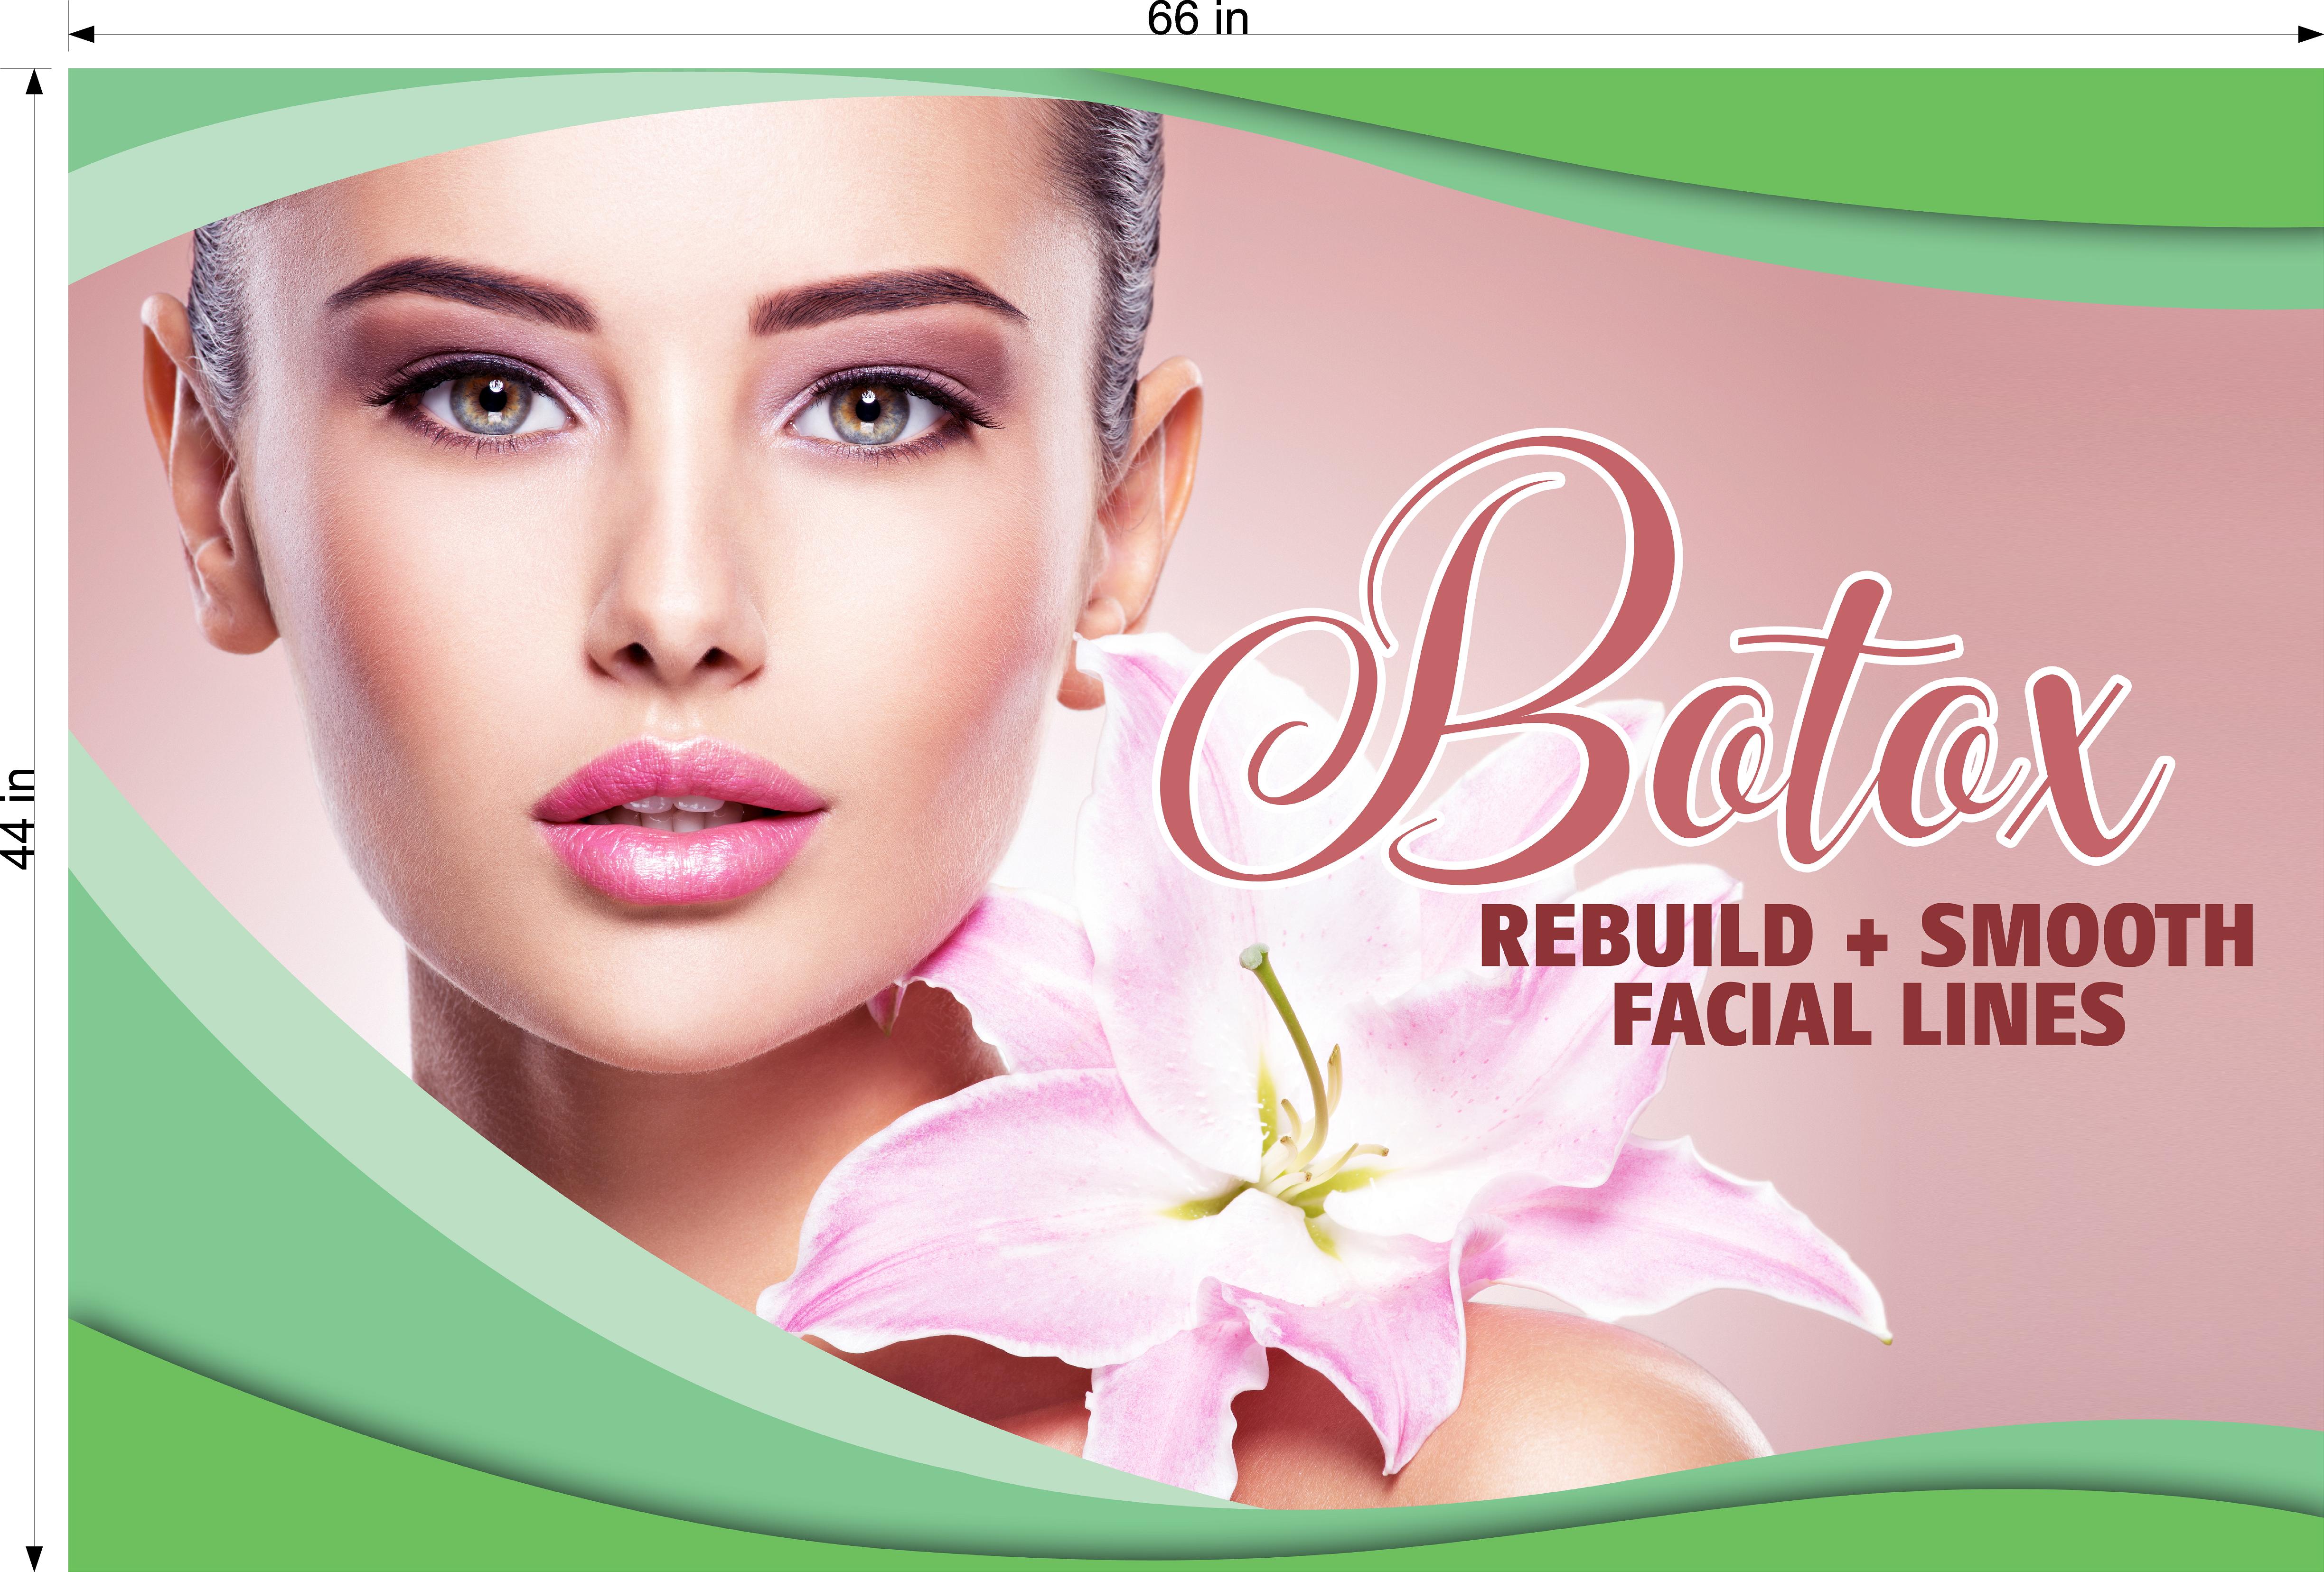 Botox 19 Photo-Realistic Paper Poster Premium Interior Inside Sign Advertising Marketing Wall Window Non-Laminated Horizontal